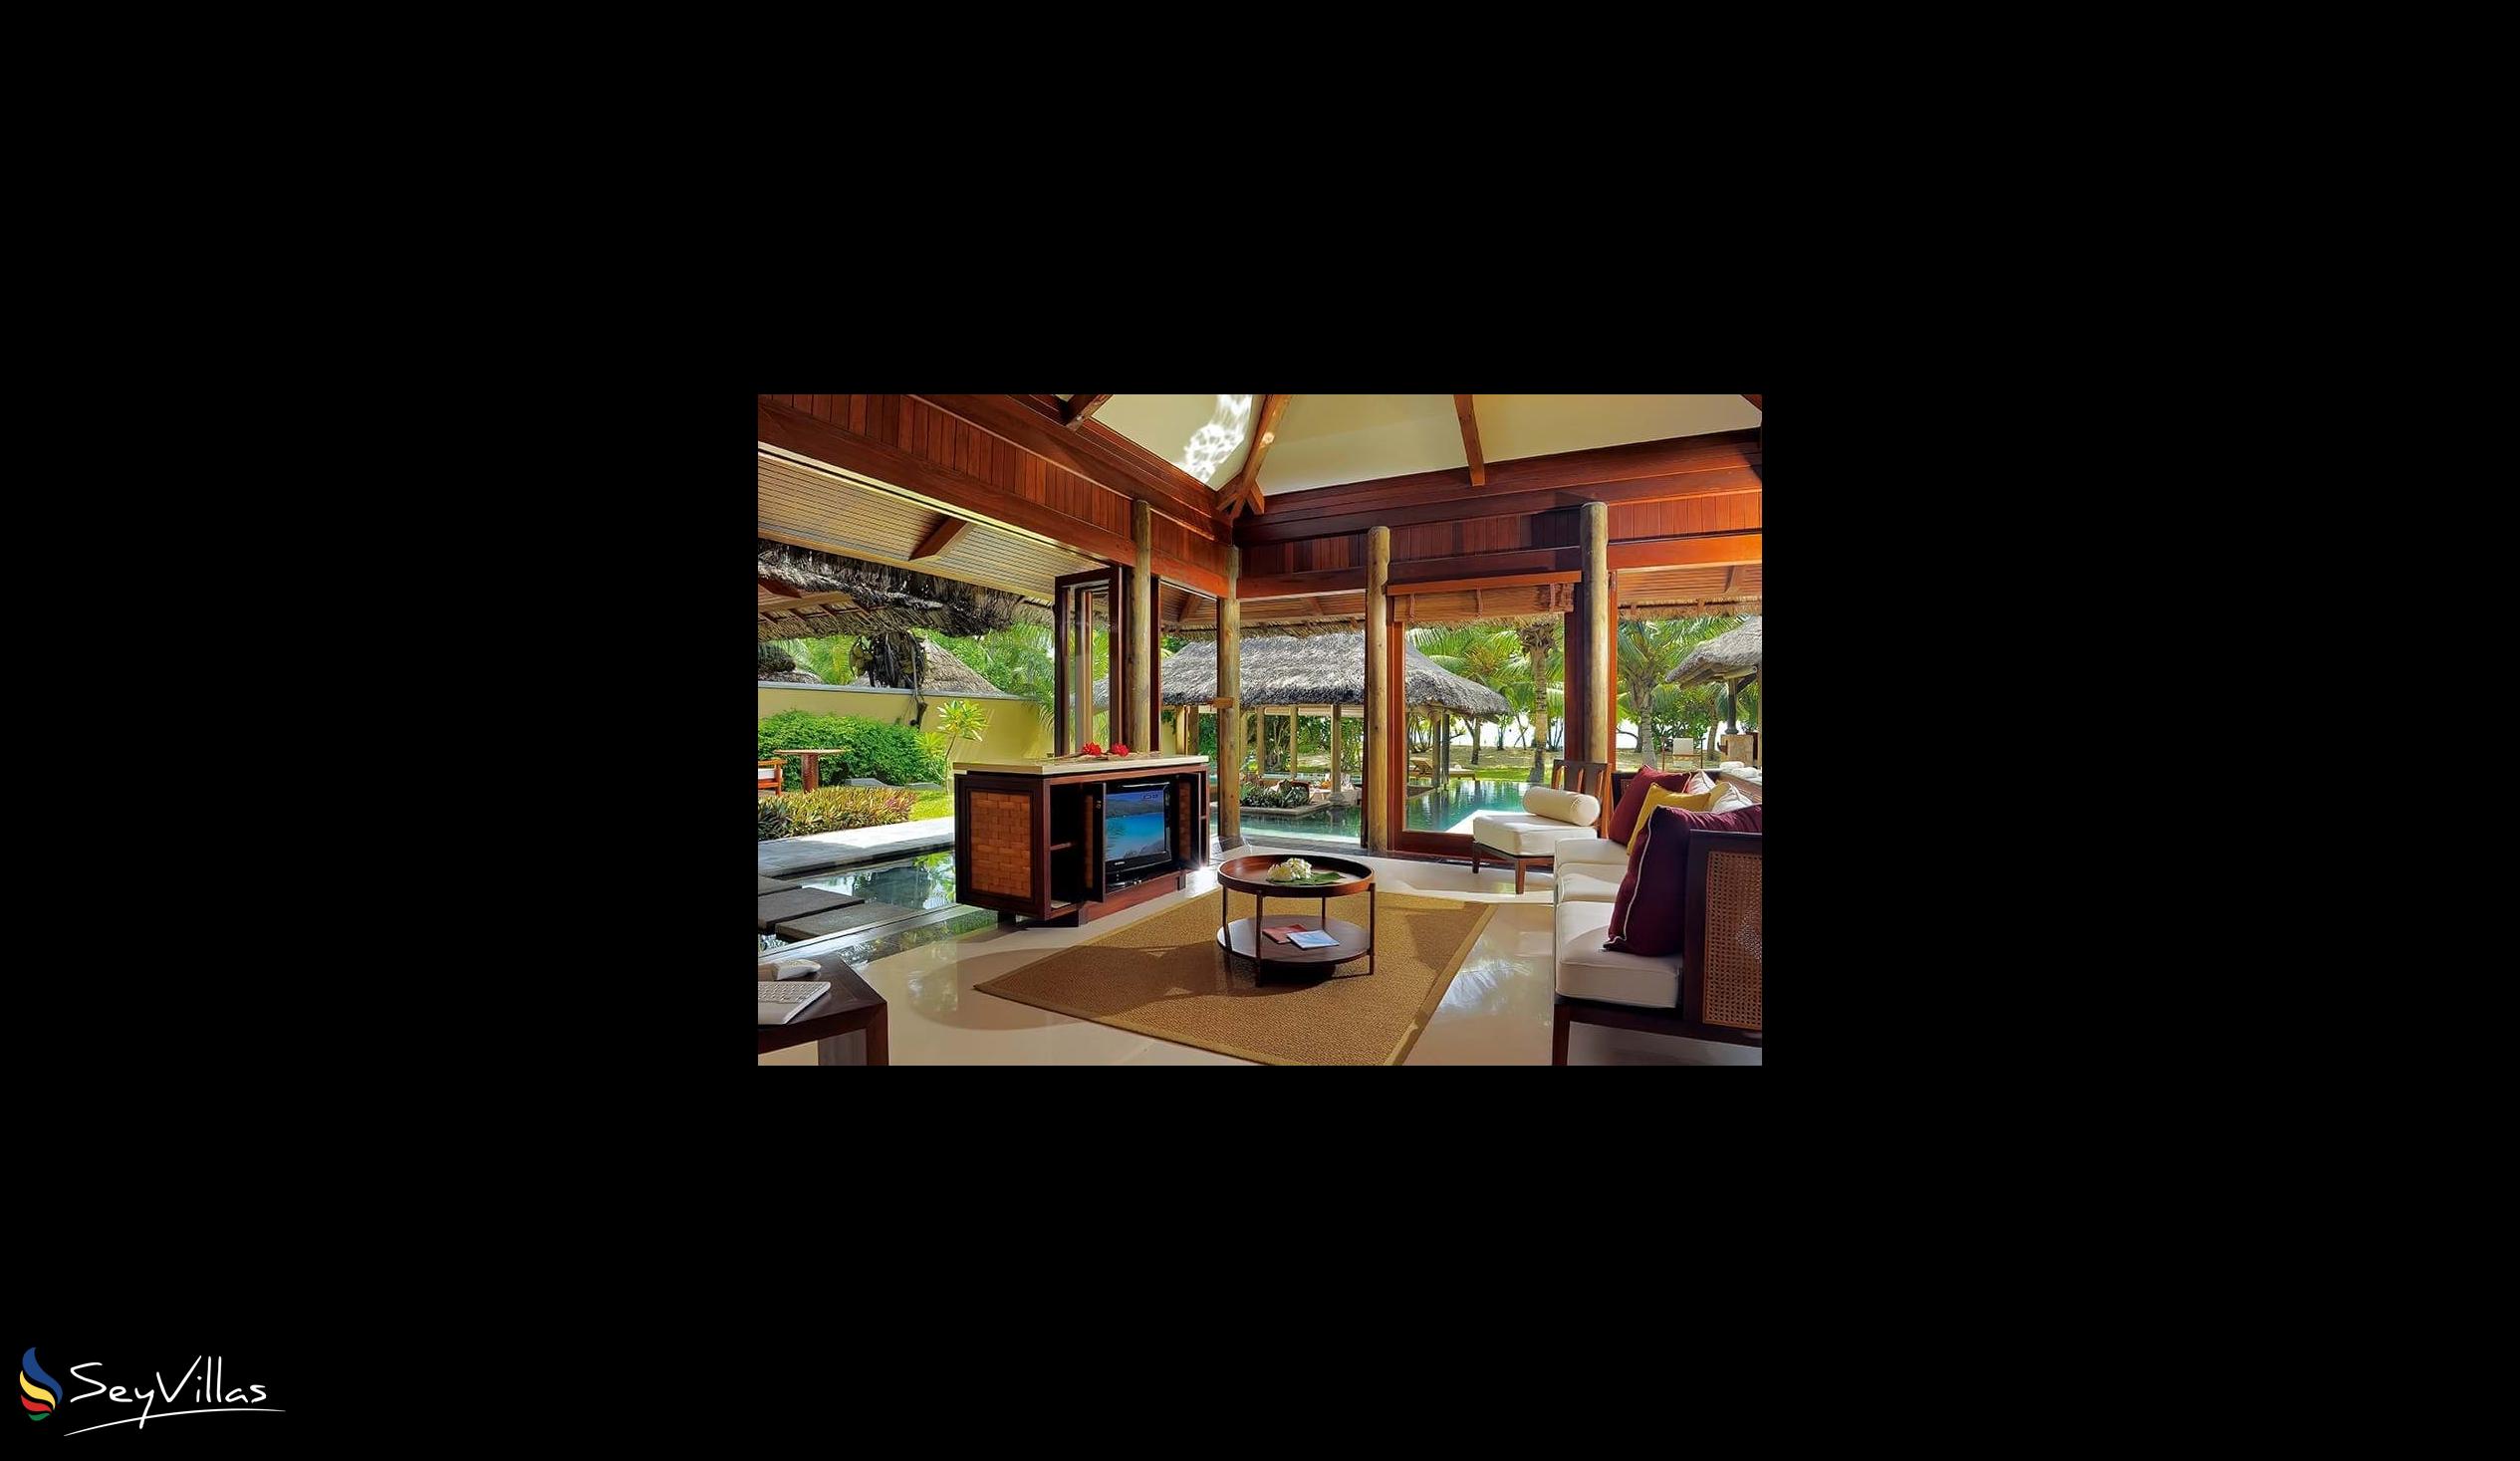 Photo 141: Constance Lémuria Seychelles - 2-Bedroom Pool Villa - Praslin (Seychelles)